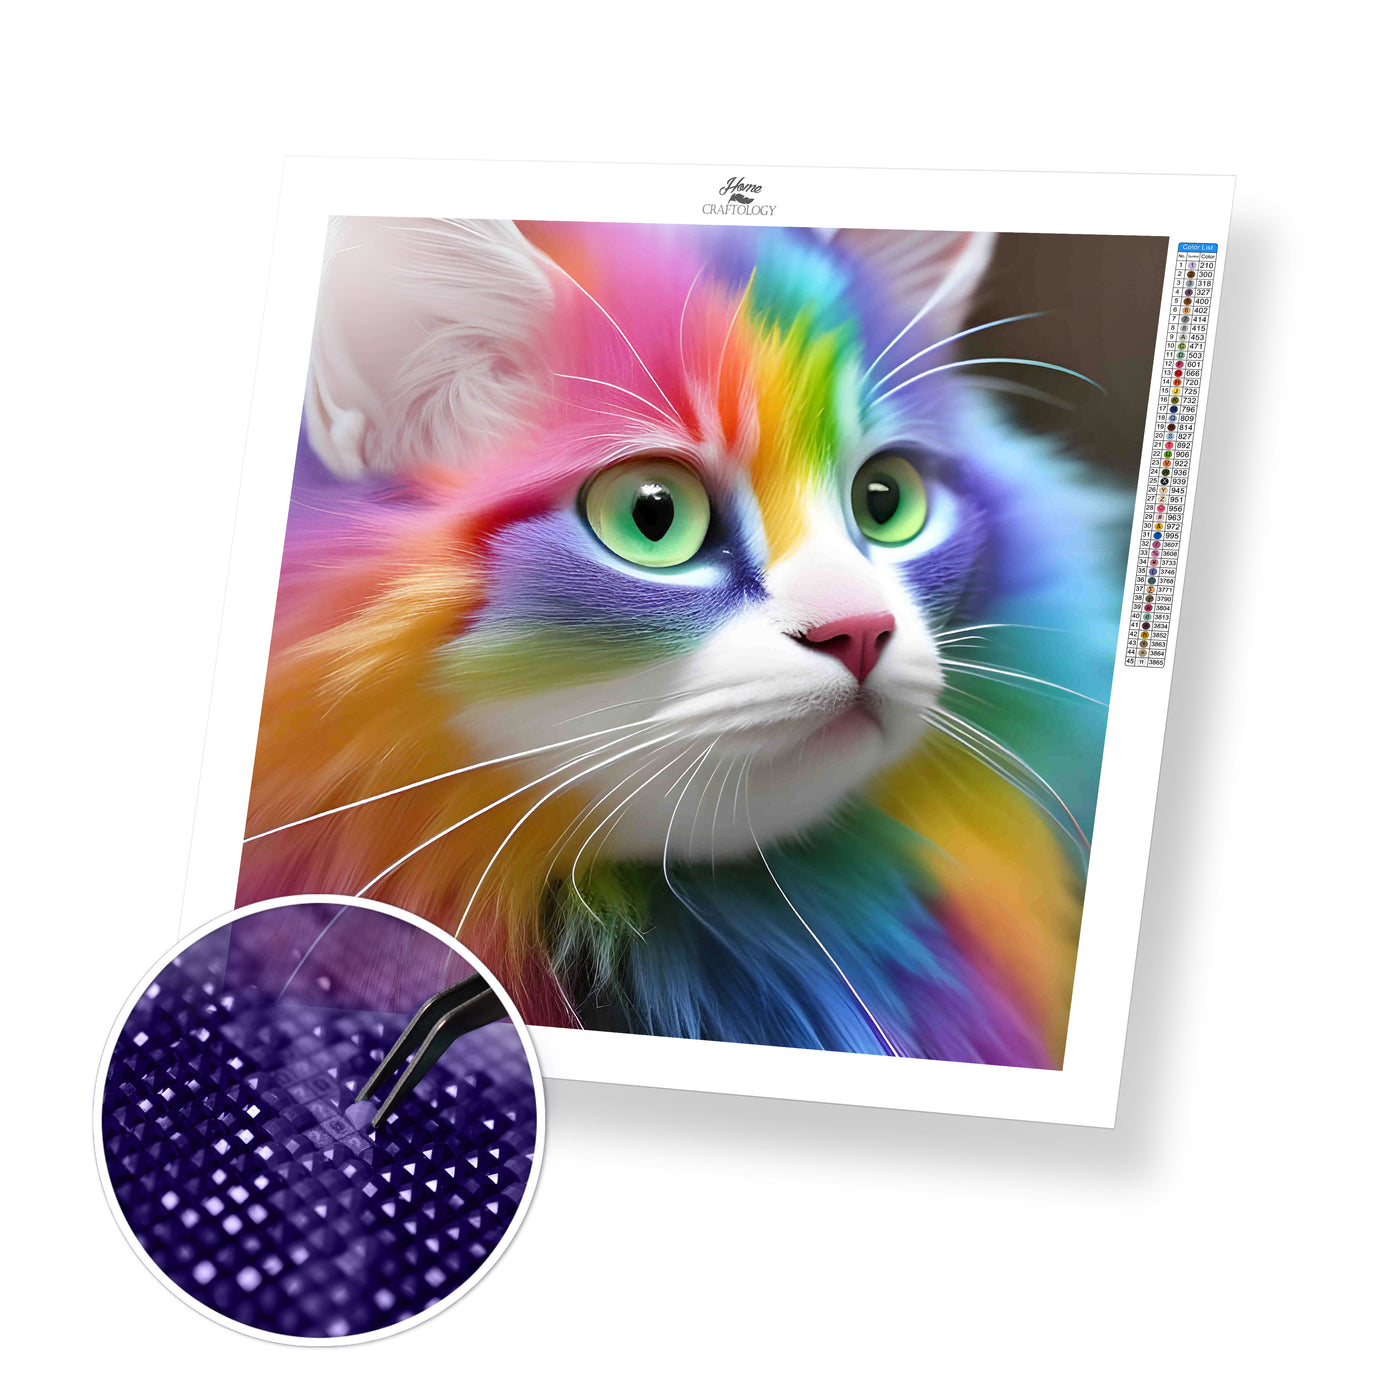 Cat's Colorful Face- Premium Diamond Painting Kit